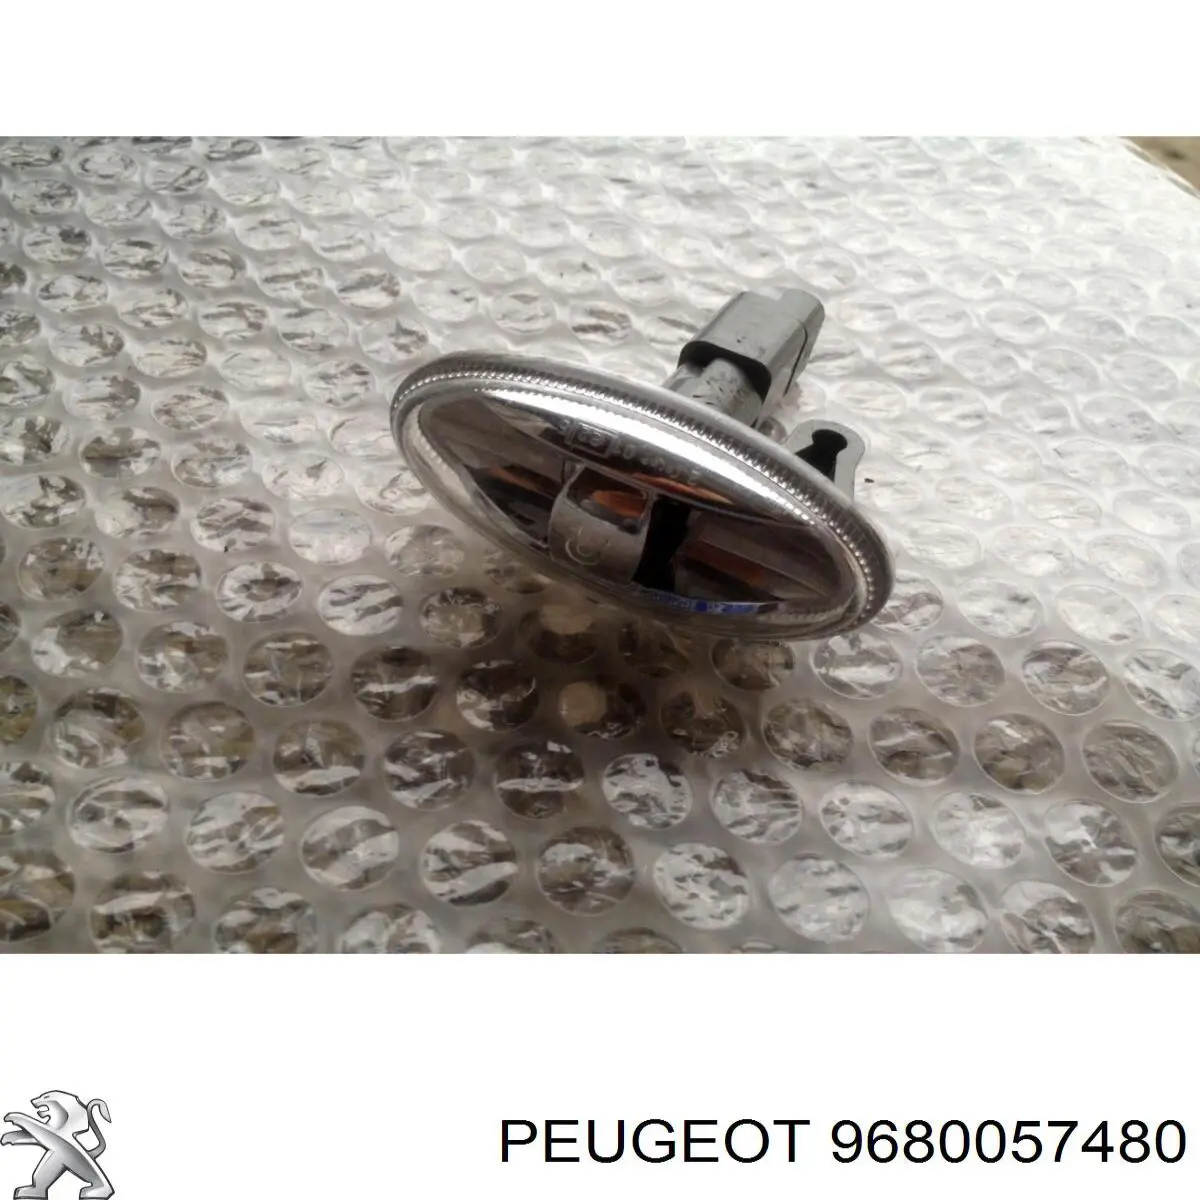 9680057480 Peugeot/Citroen luz intermitente no pára-lama